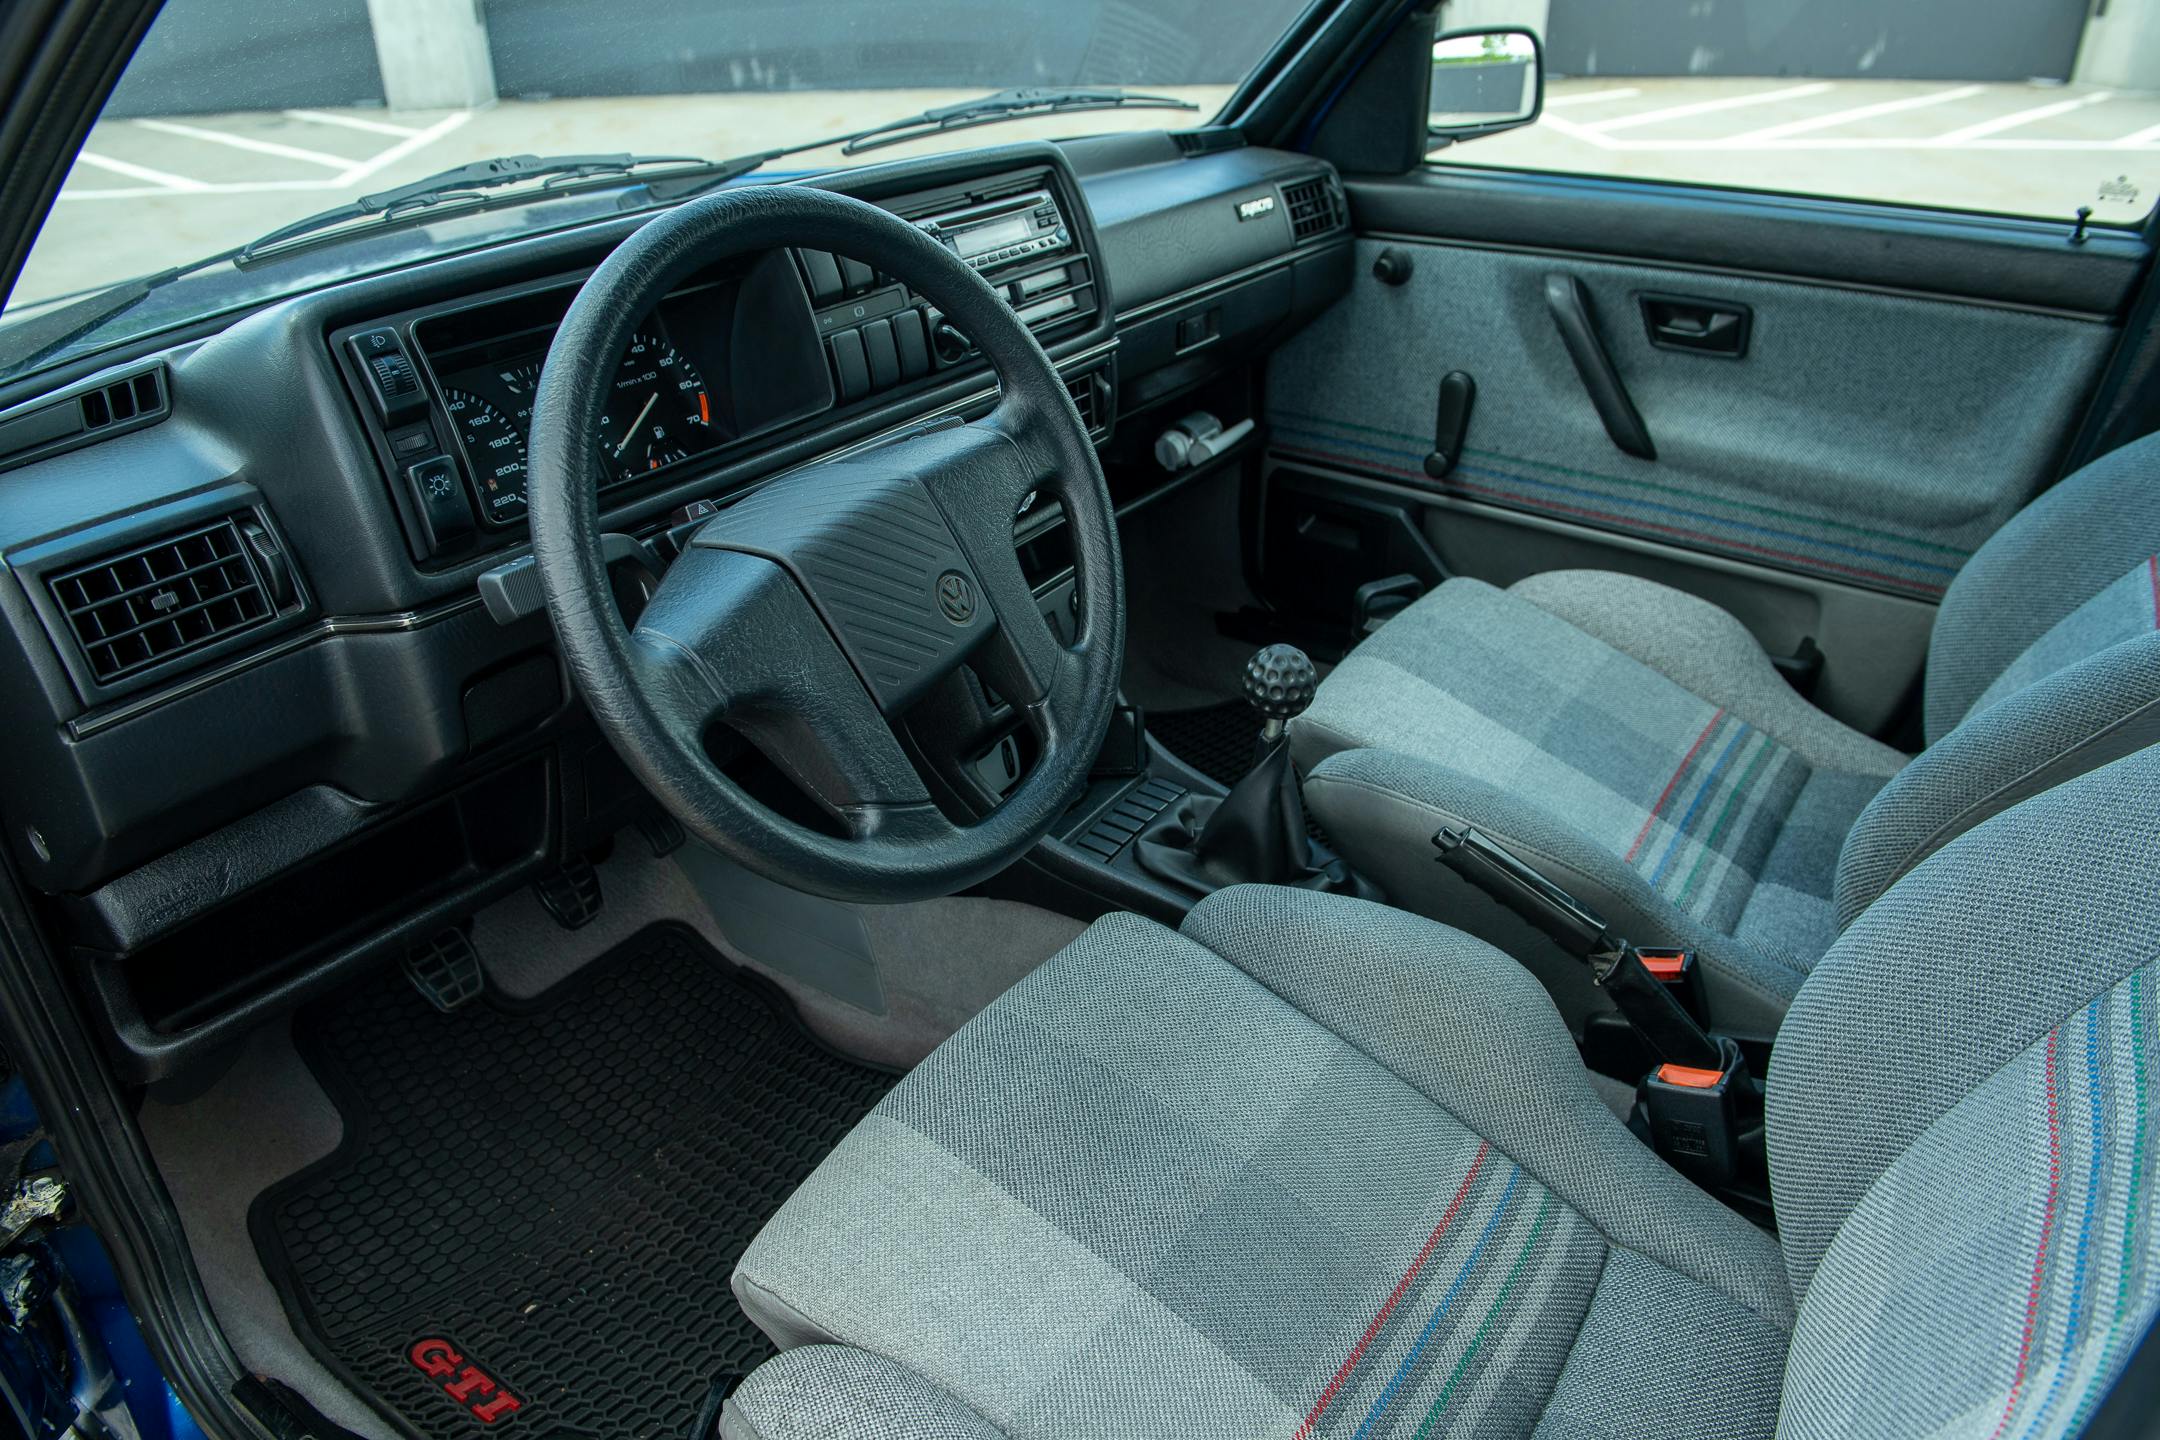 Volkswagen Golf Country interior wheel and dash